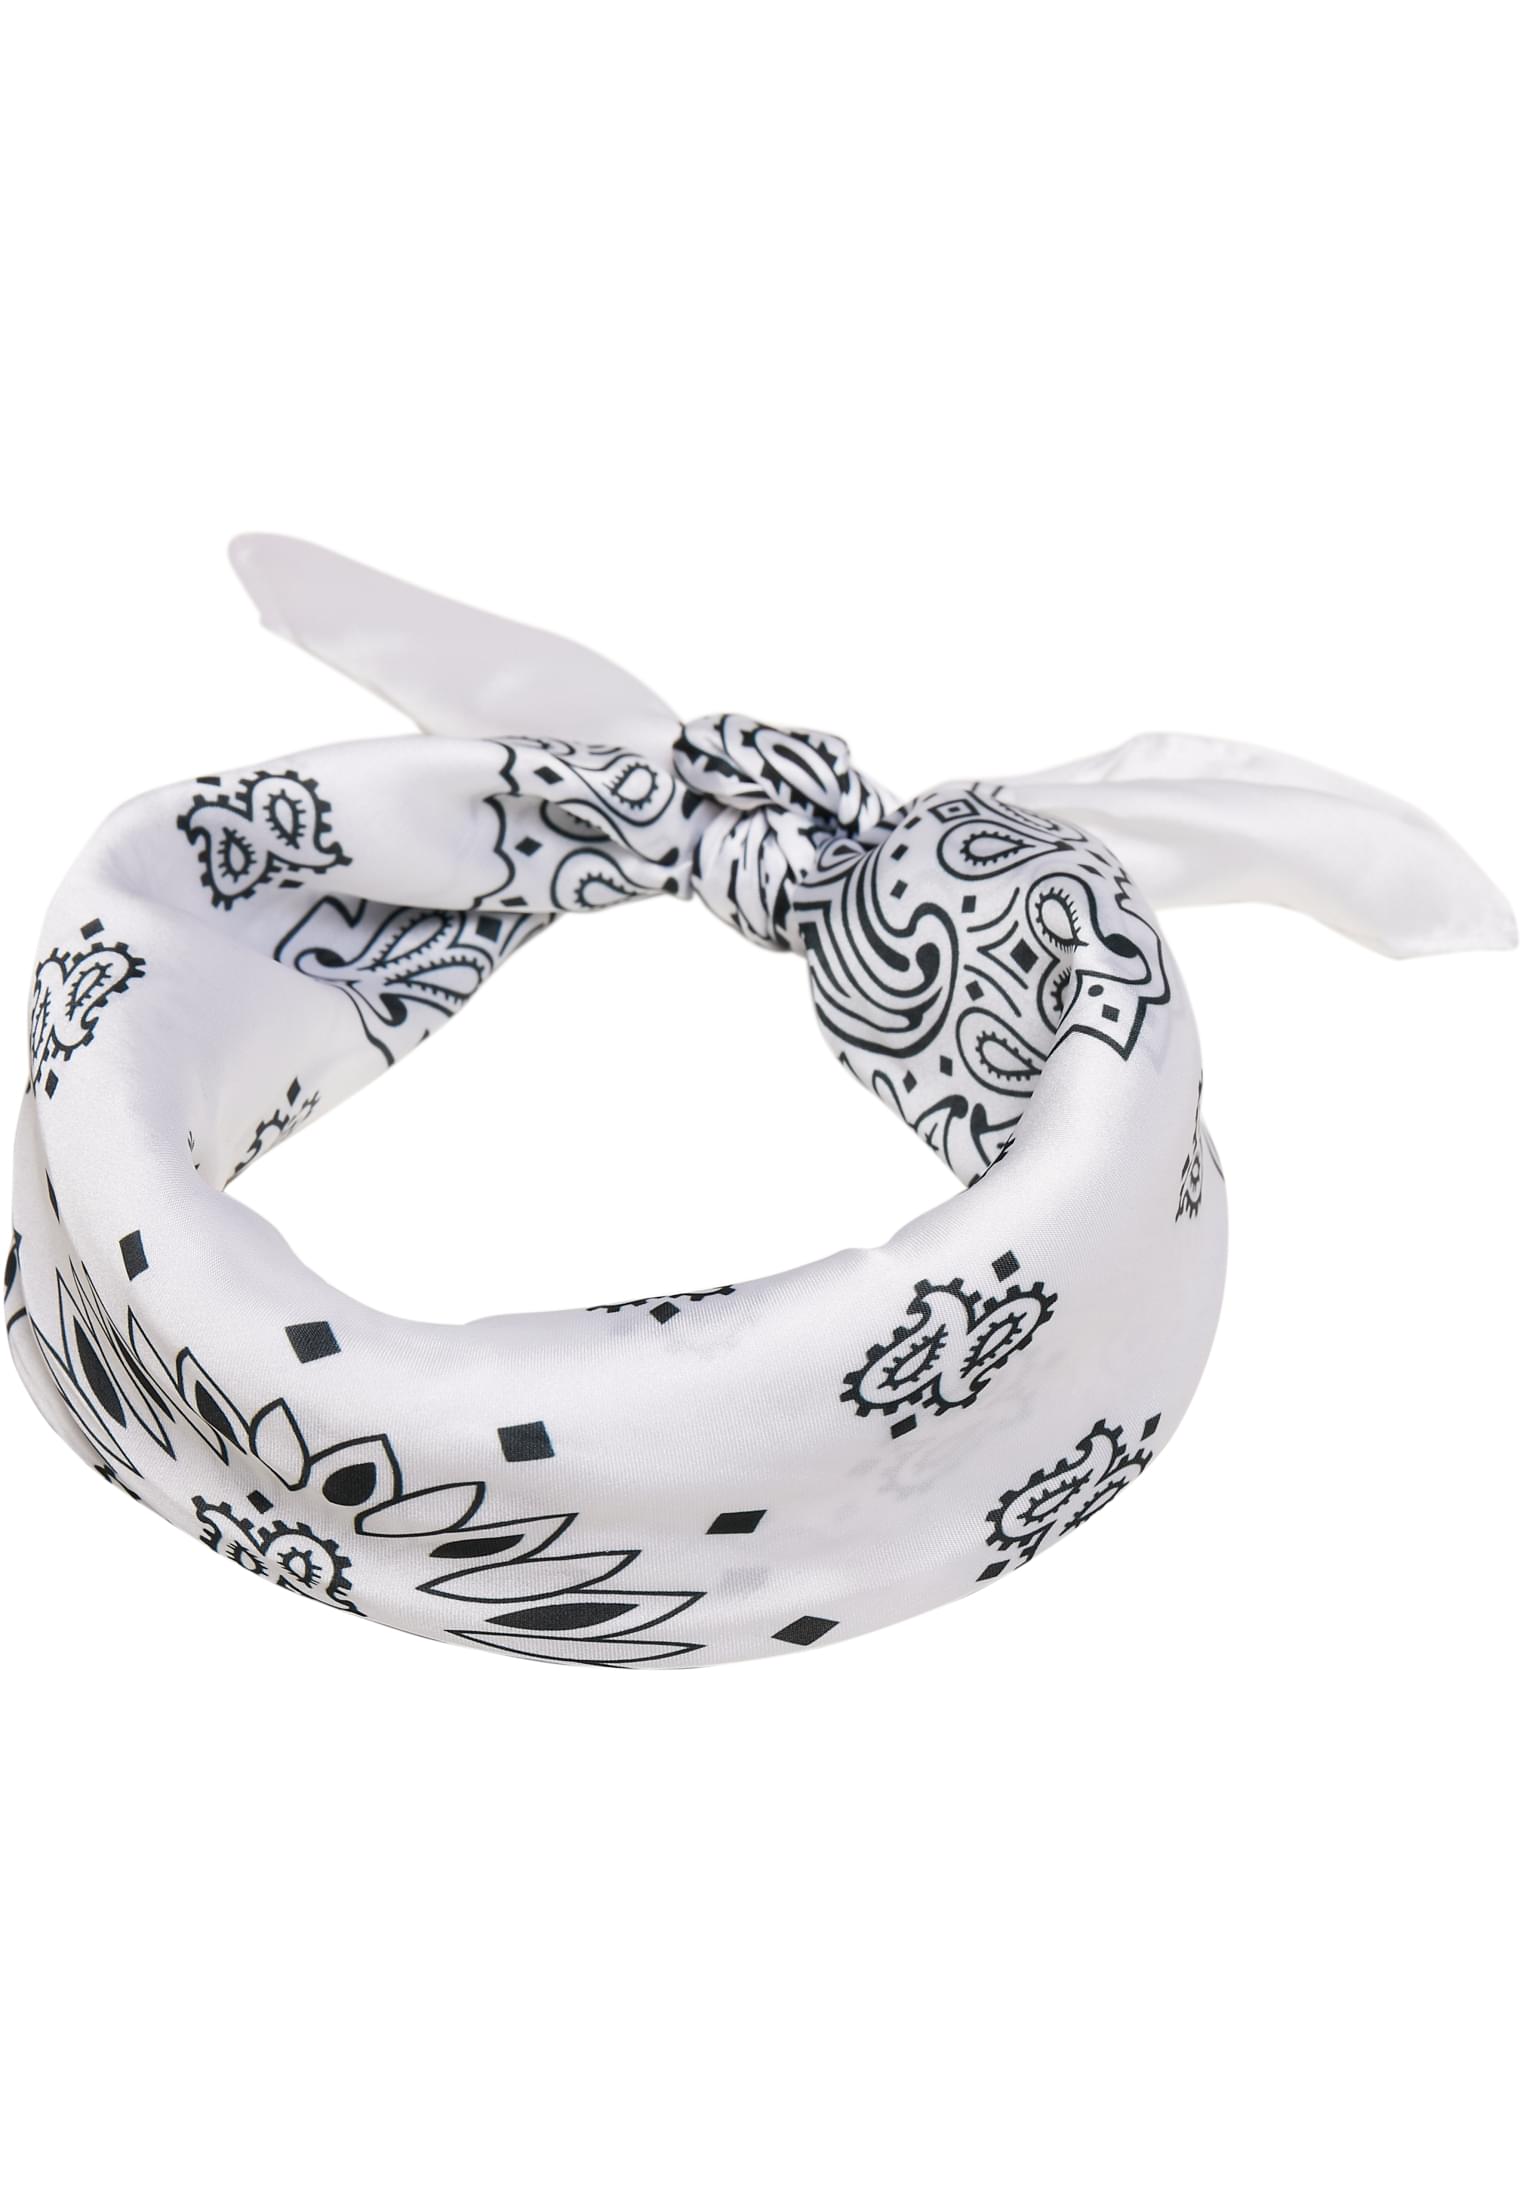 Masken Satin Bandana 2-Pack in Farbe black/white